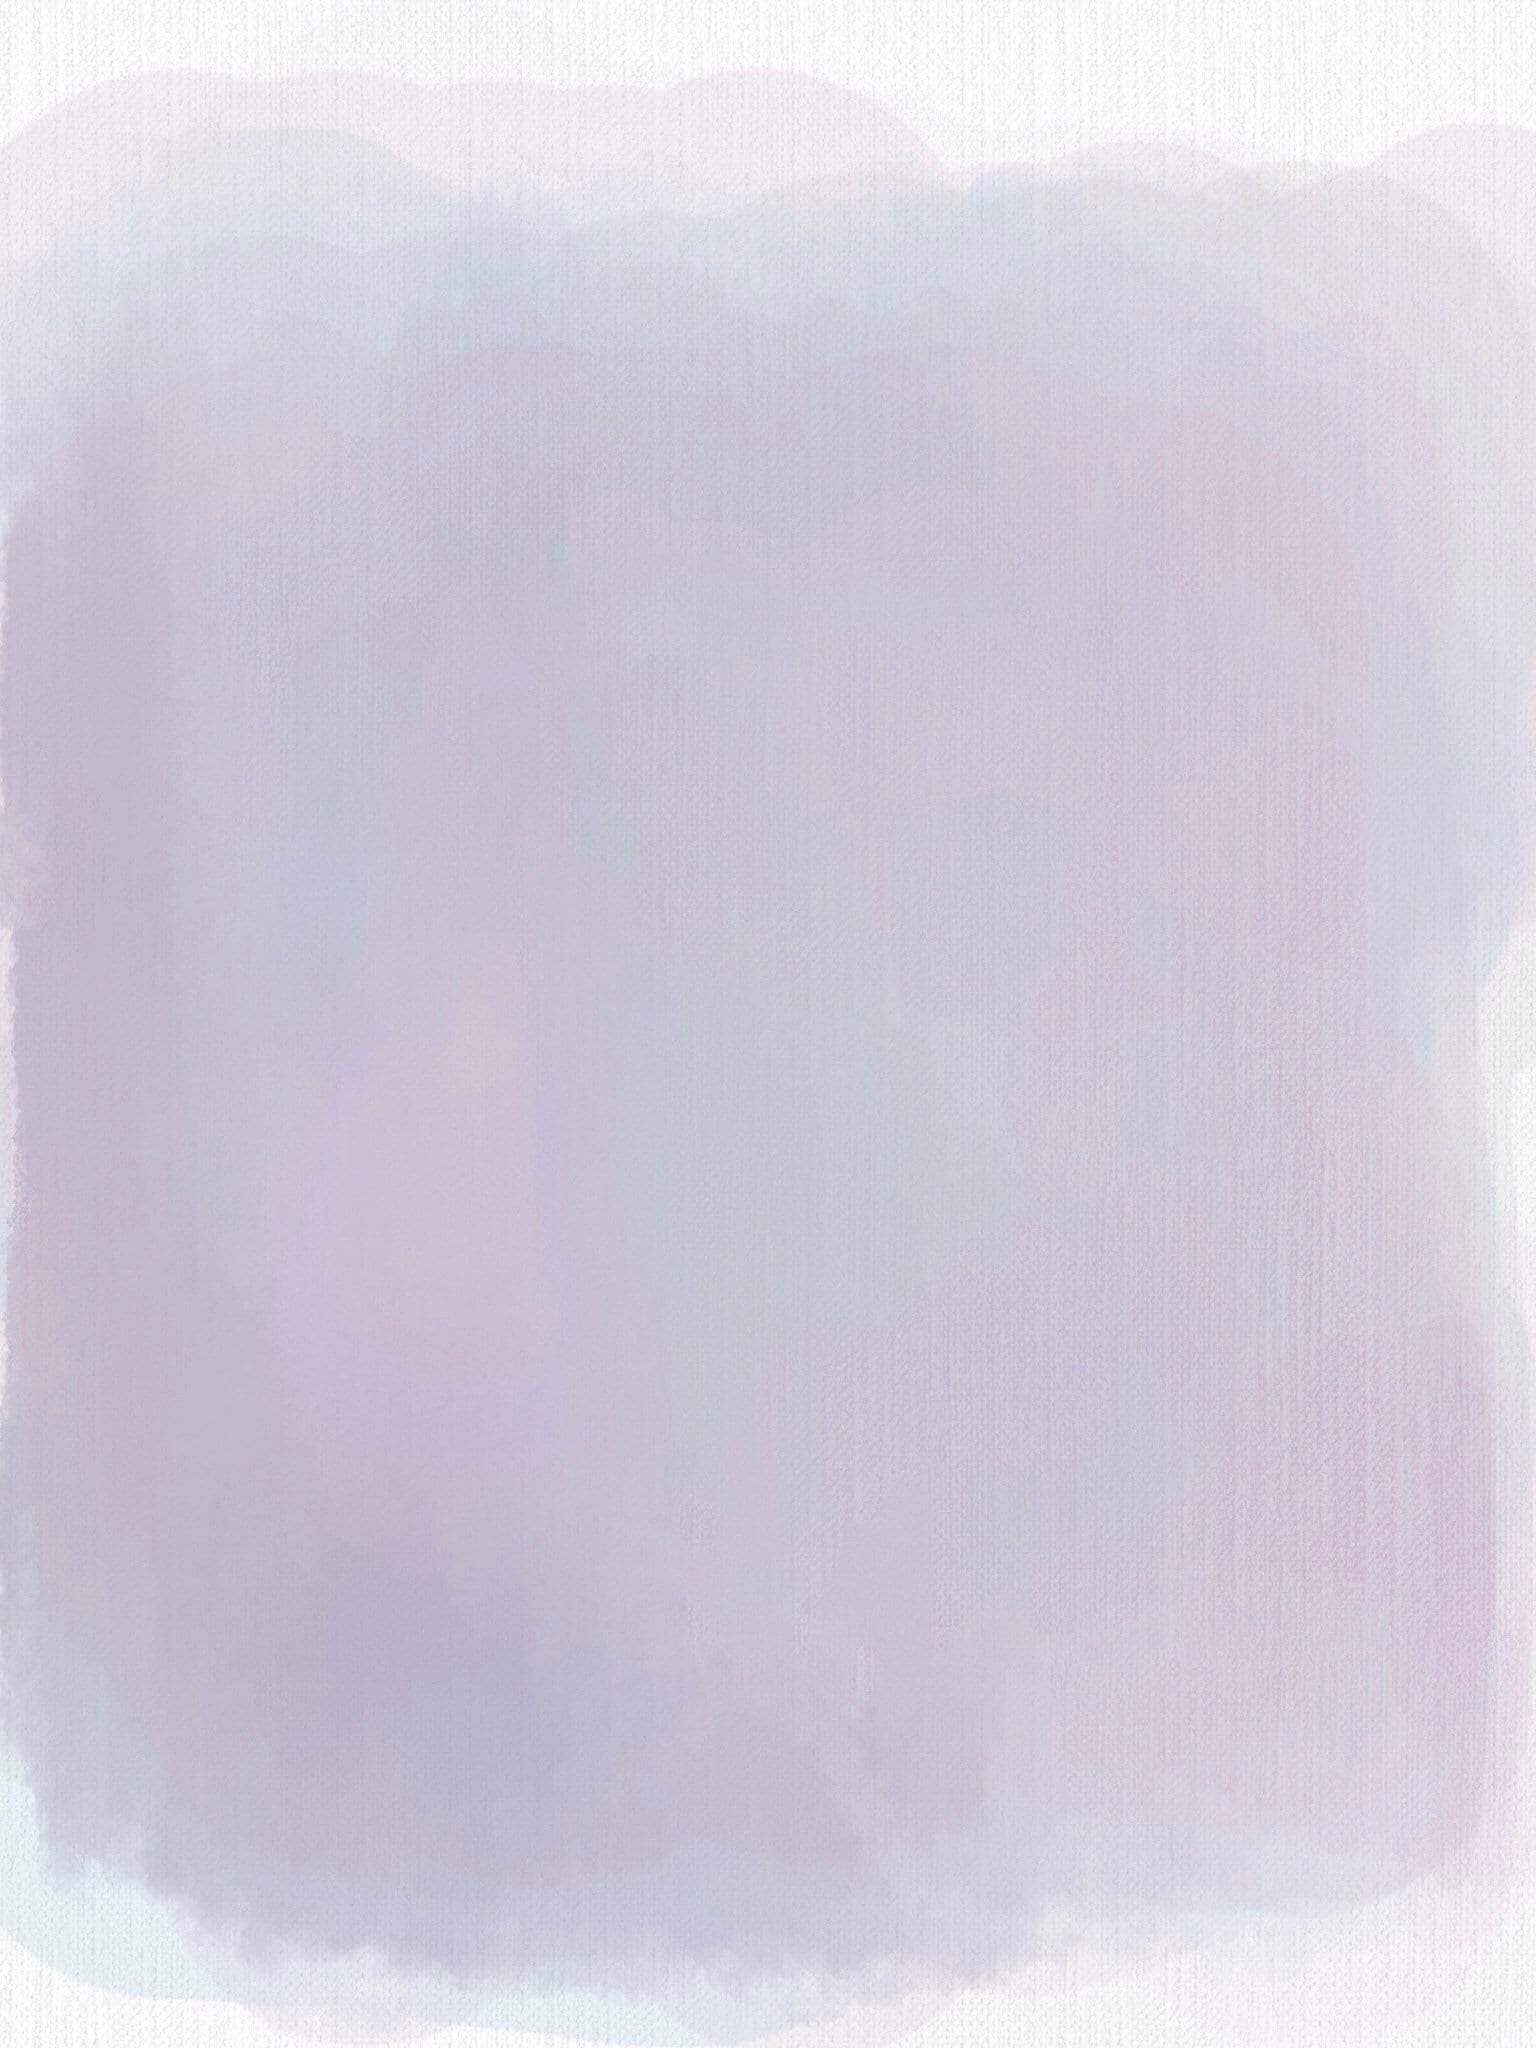 Lavender Dreamy Aesthetic Wallpaper